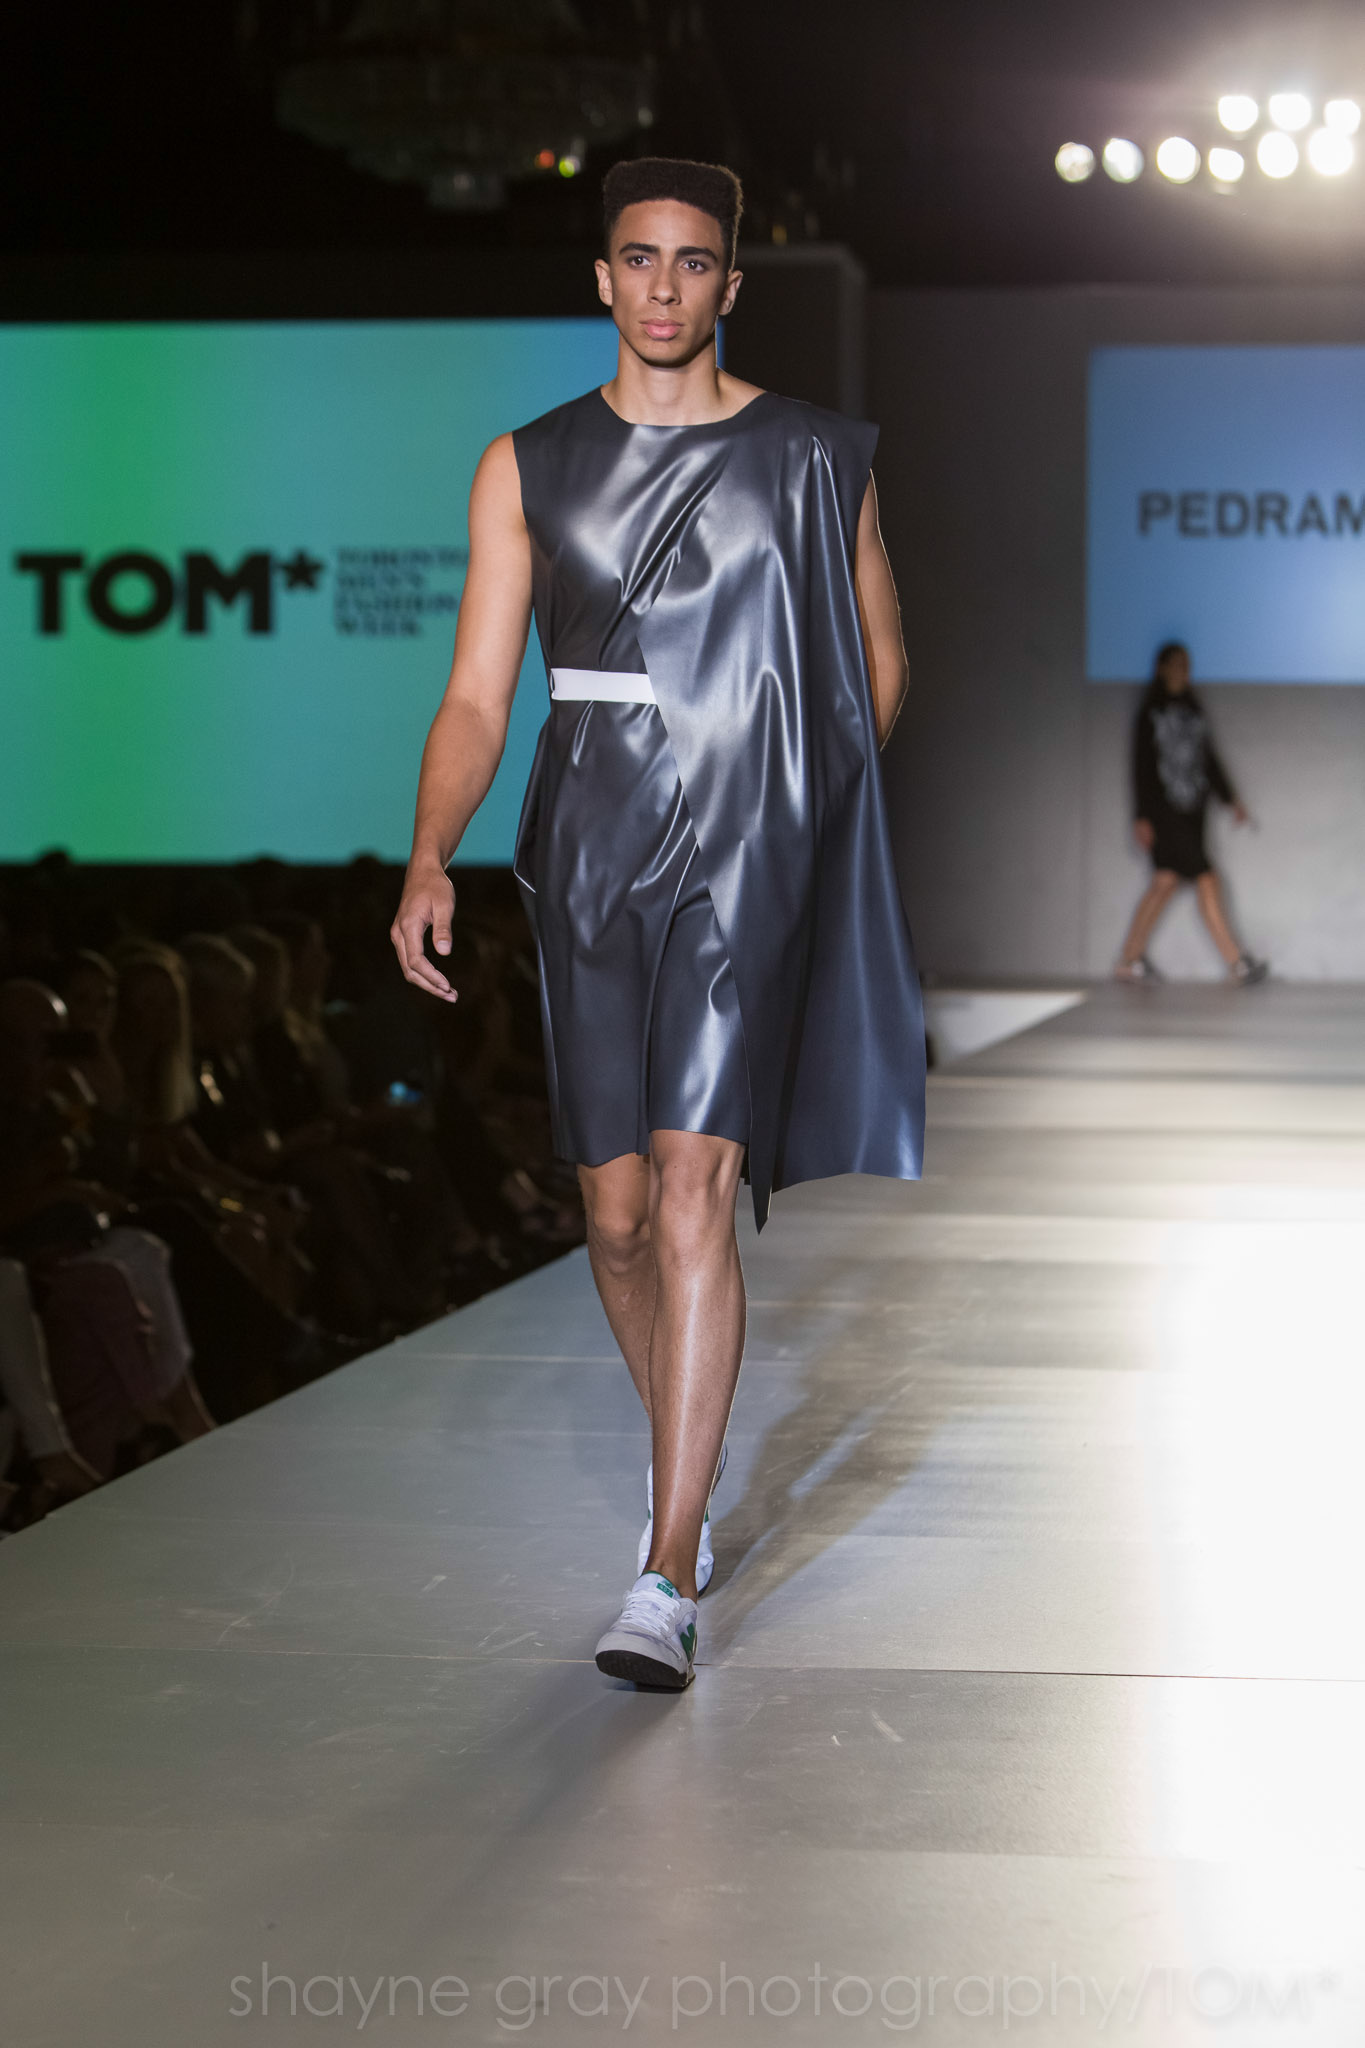 Shayne-Gray-Toronto-men's-fashion_week-TOM-Pedram-Karimi-8912.jpg